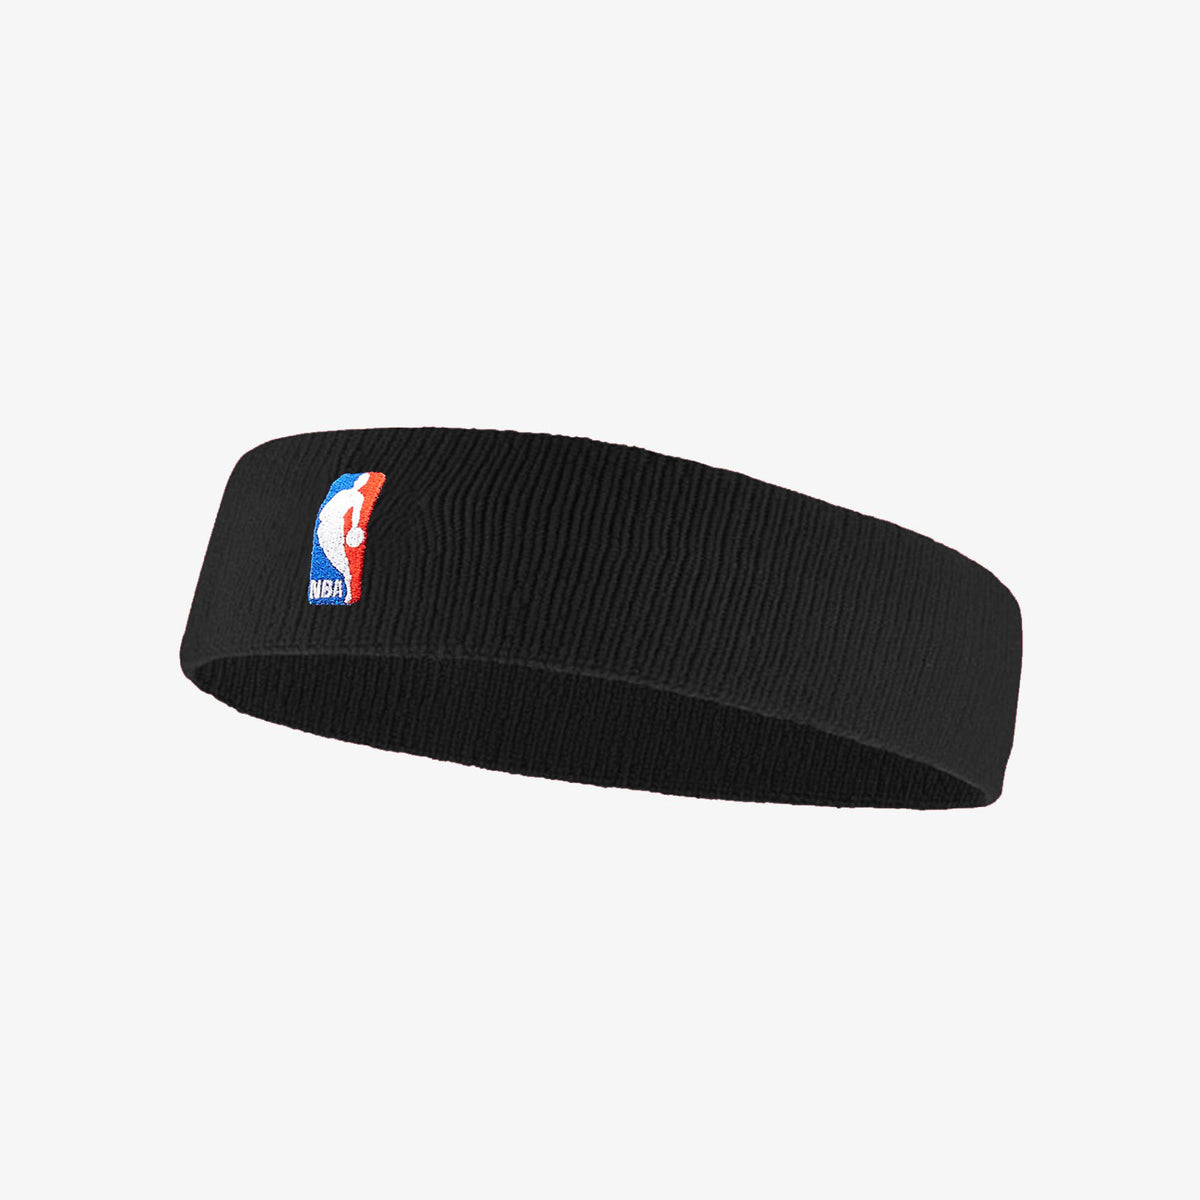 Nike NBA Headband - Black